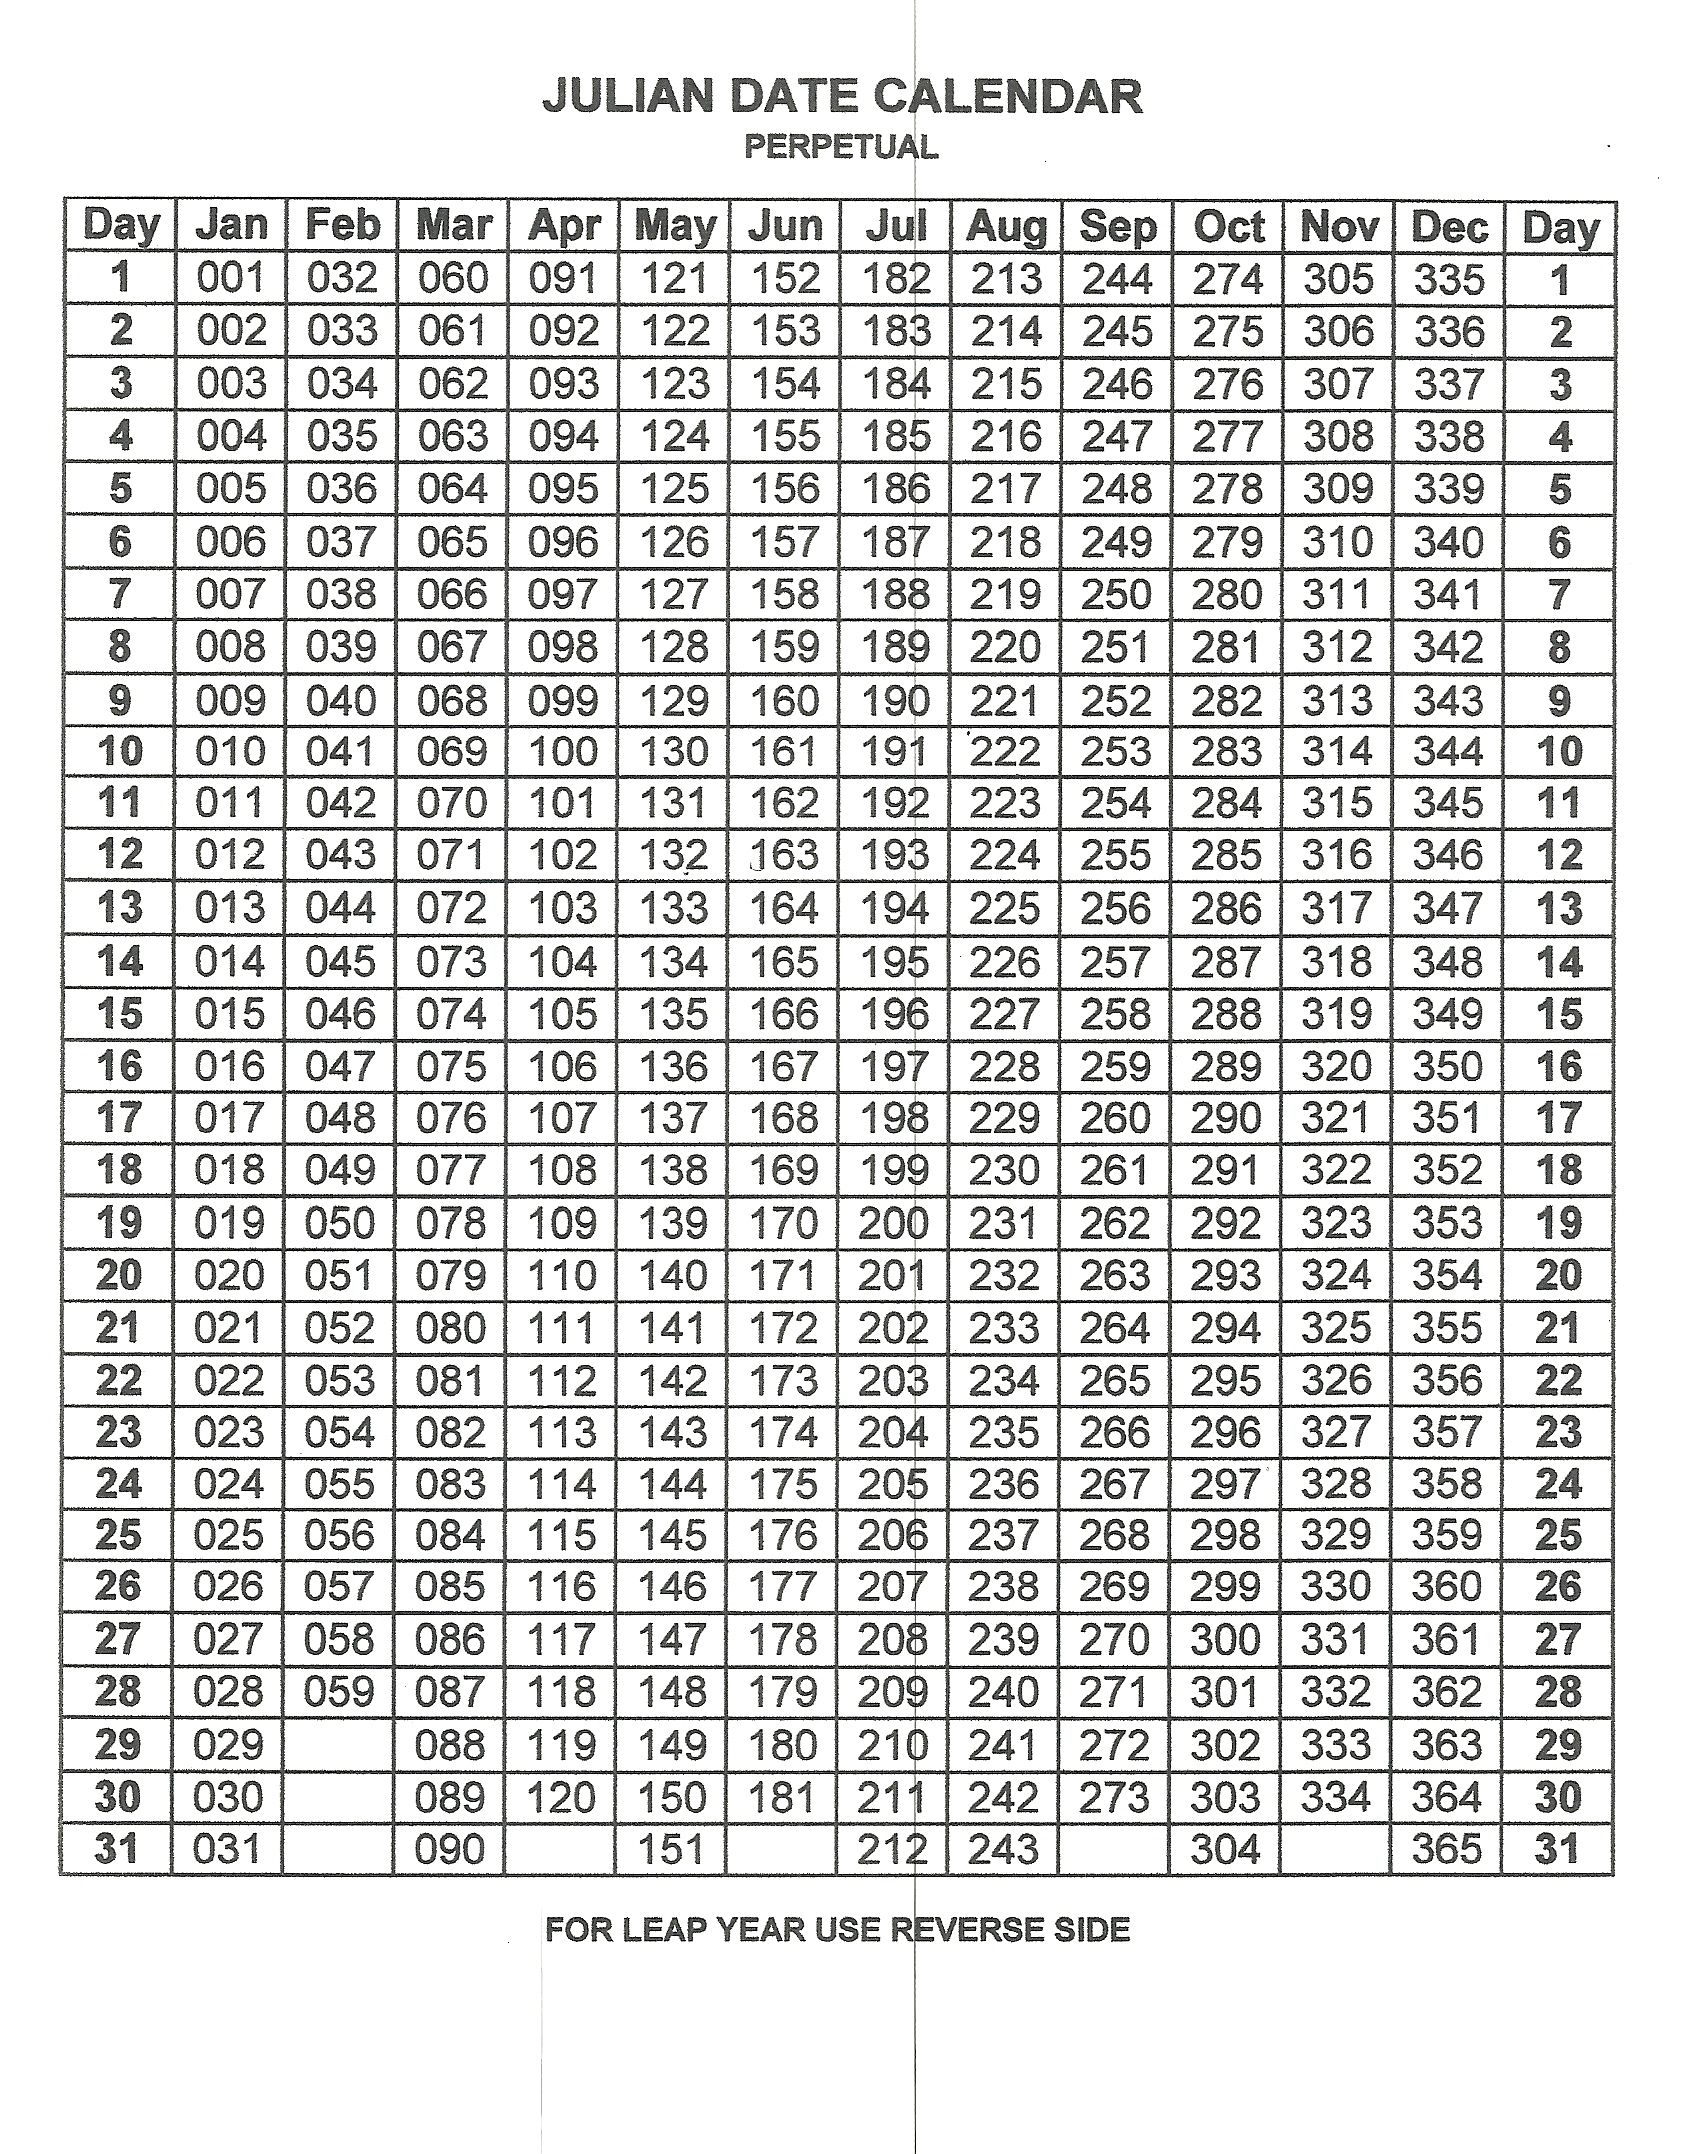 Julian Calendar Pdf | Calendar For Planning within Julian Calendar Leap Year Pdf